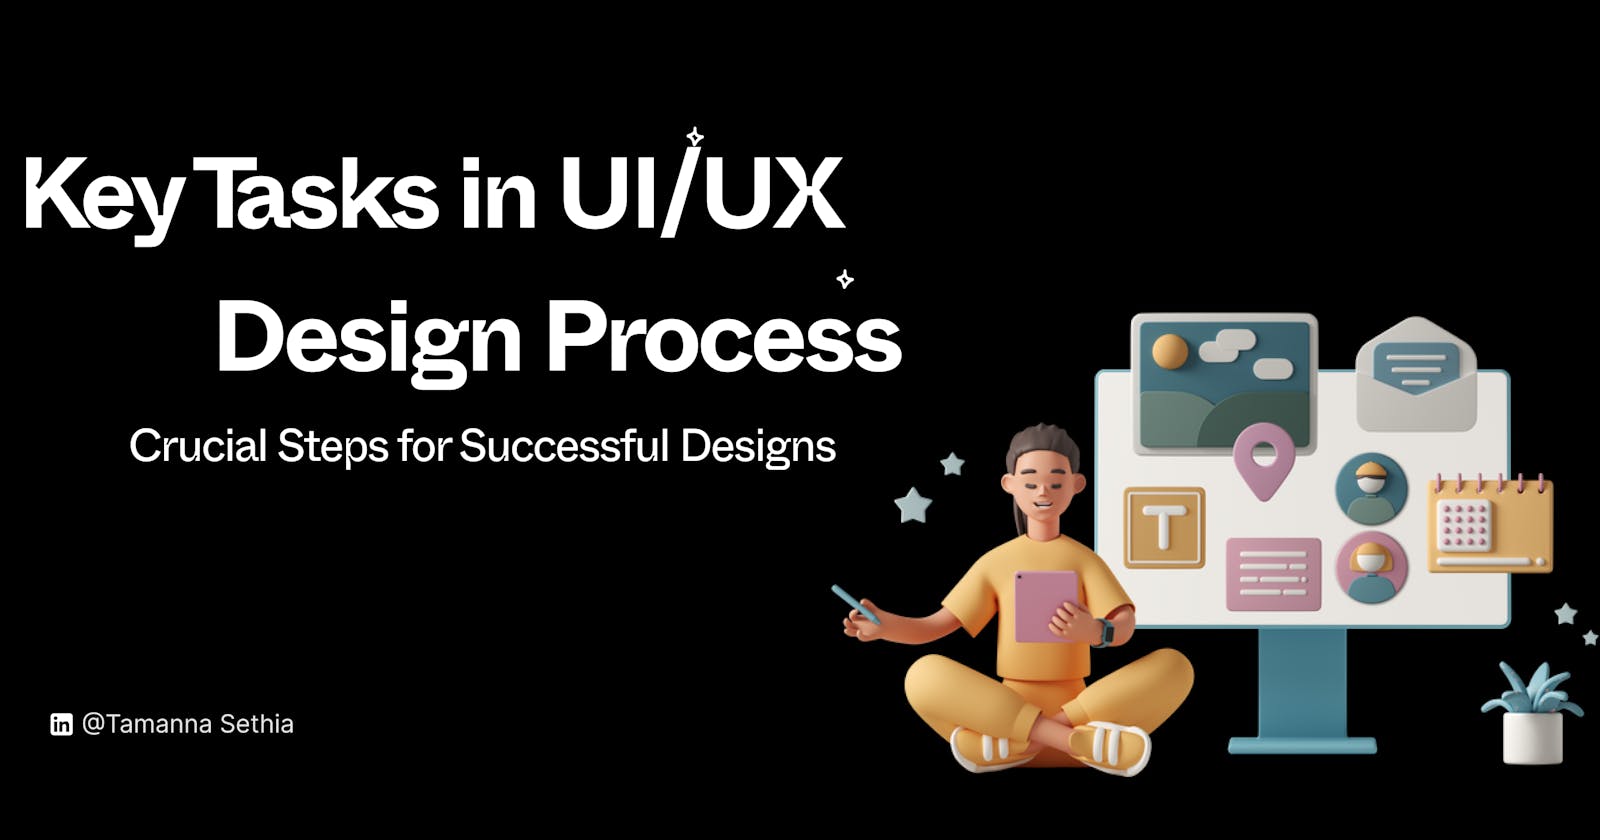 Key Tasks in UI/UX Design Process